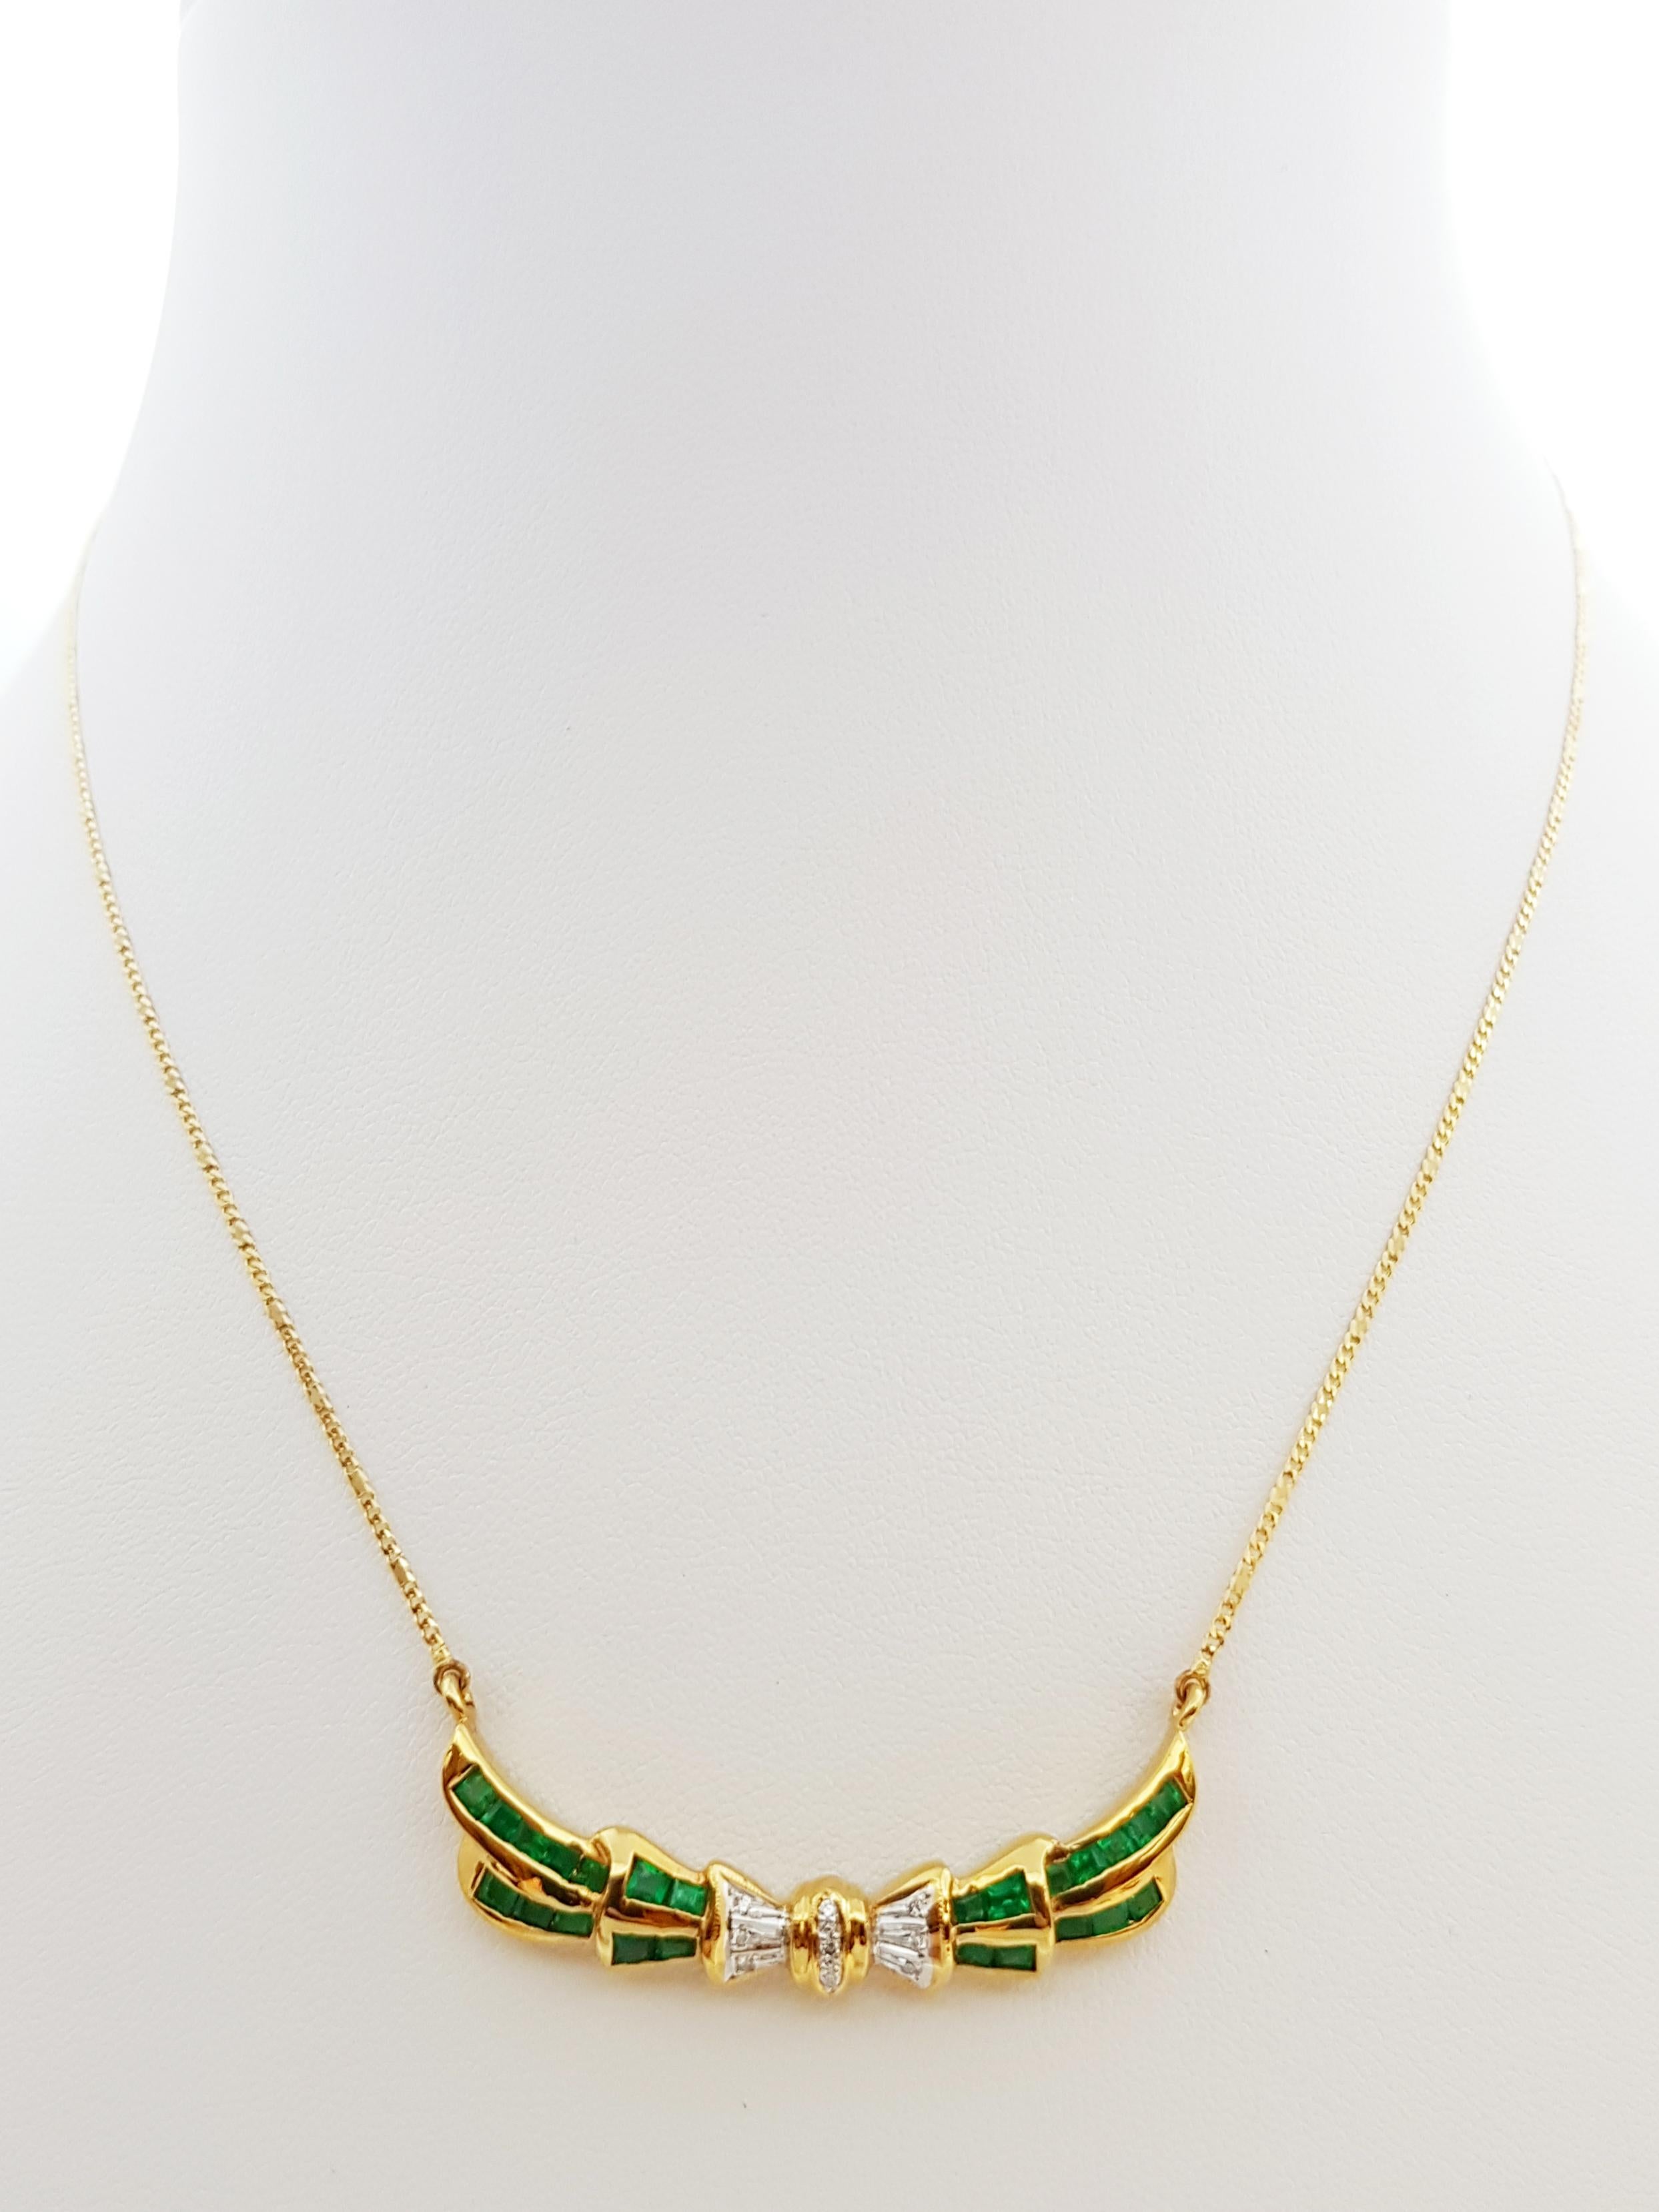 Emerald 1.02 carats with Diamond 0.04 carat Necklace set in 18 Karat Gold Settings

Width: 1.3 cm 
Length: 44.0 cm
Total Weight: 9.34 grams

